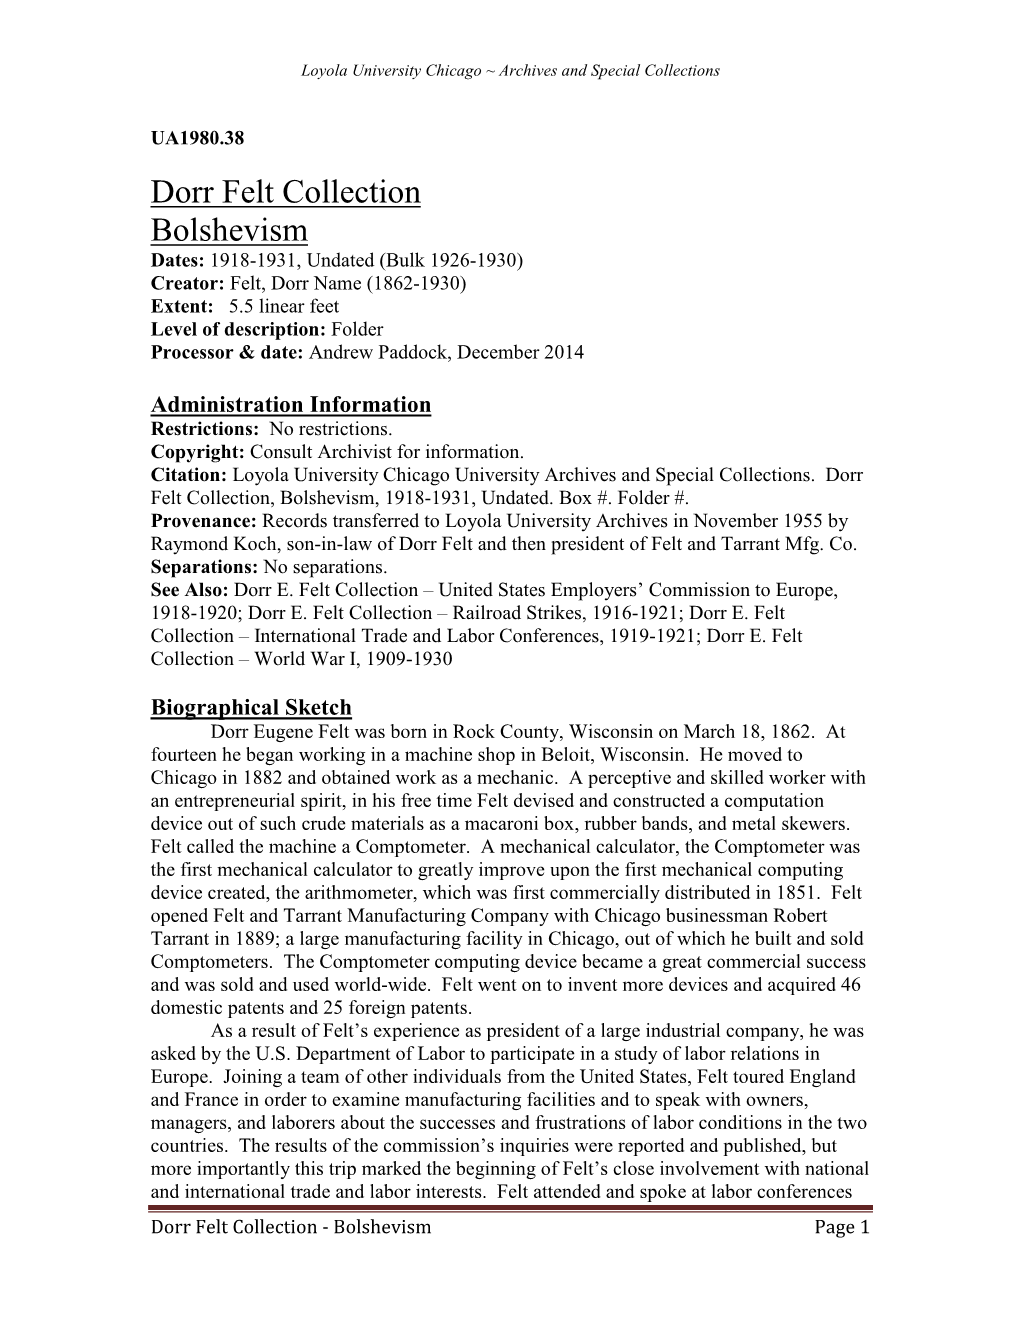 Dorr E. Felt Collection: Bolshevism, 1918-1931